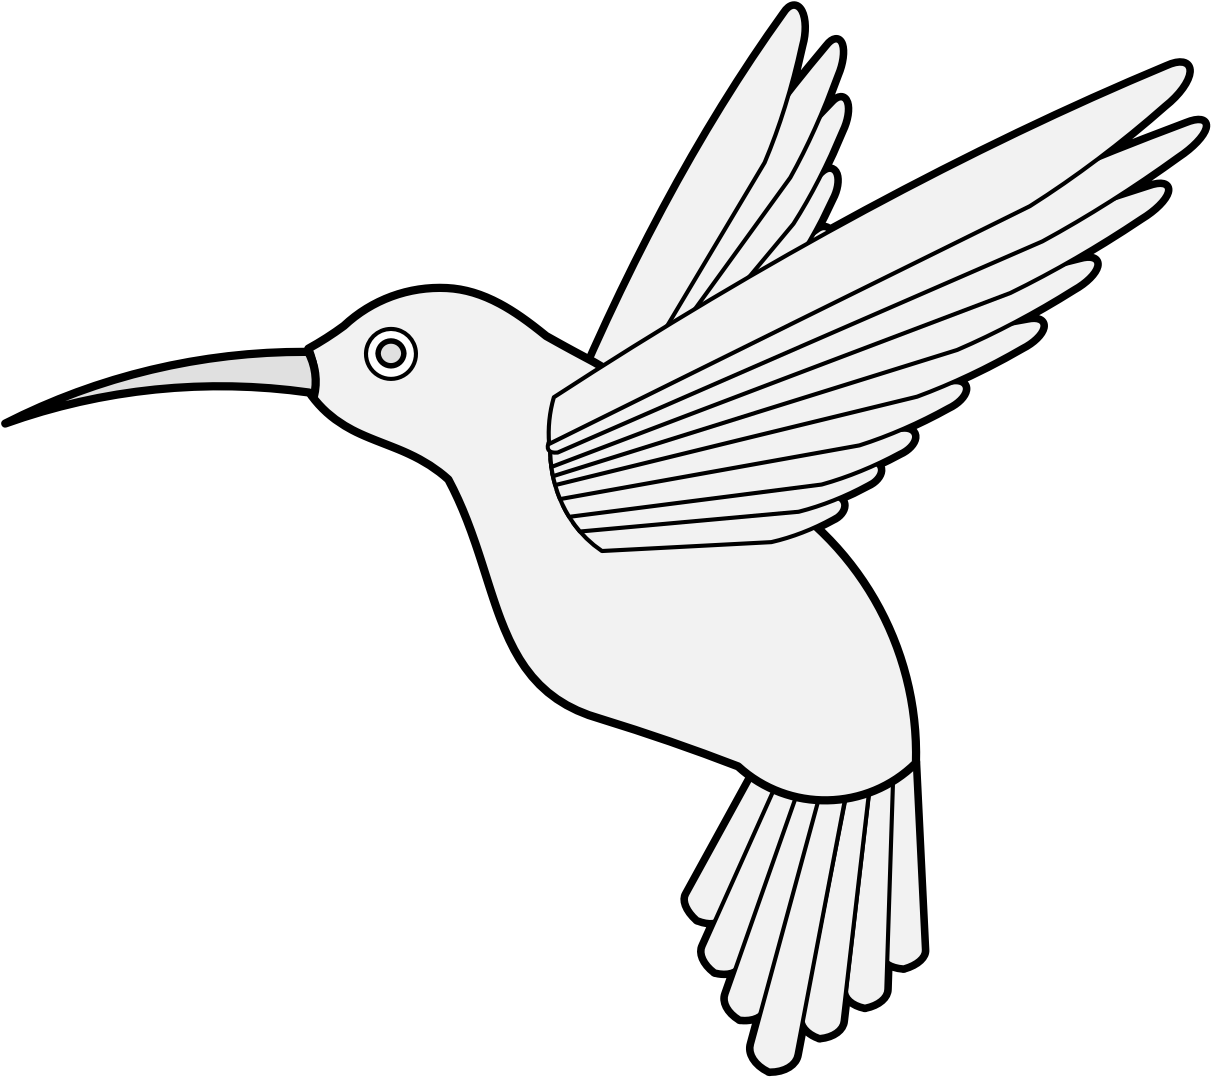 A White Bird With A Long Beak